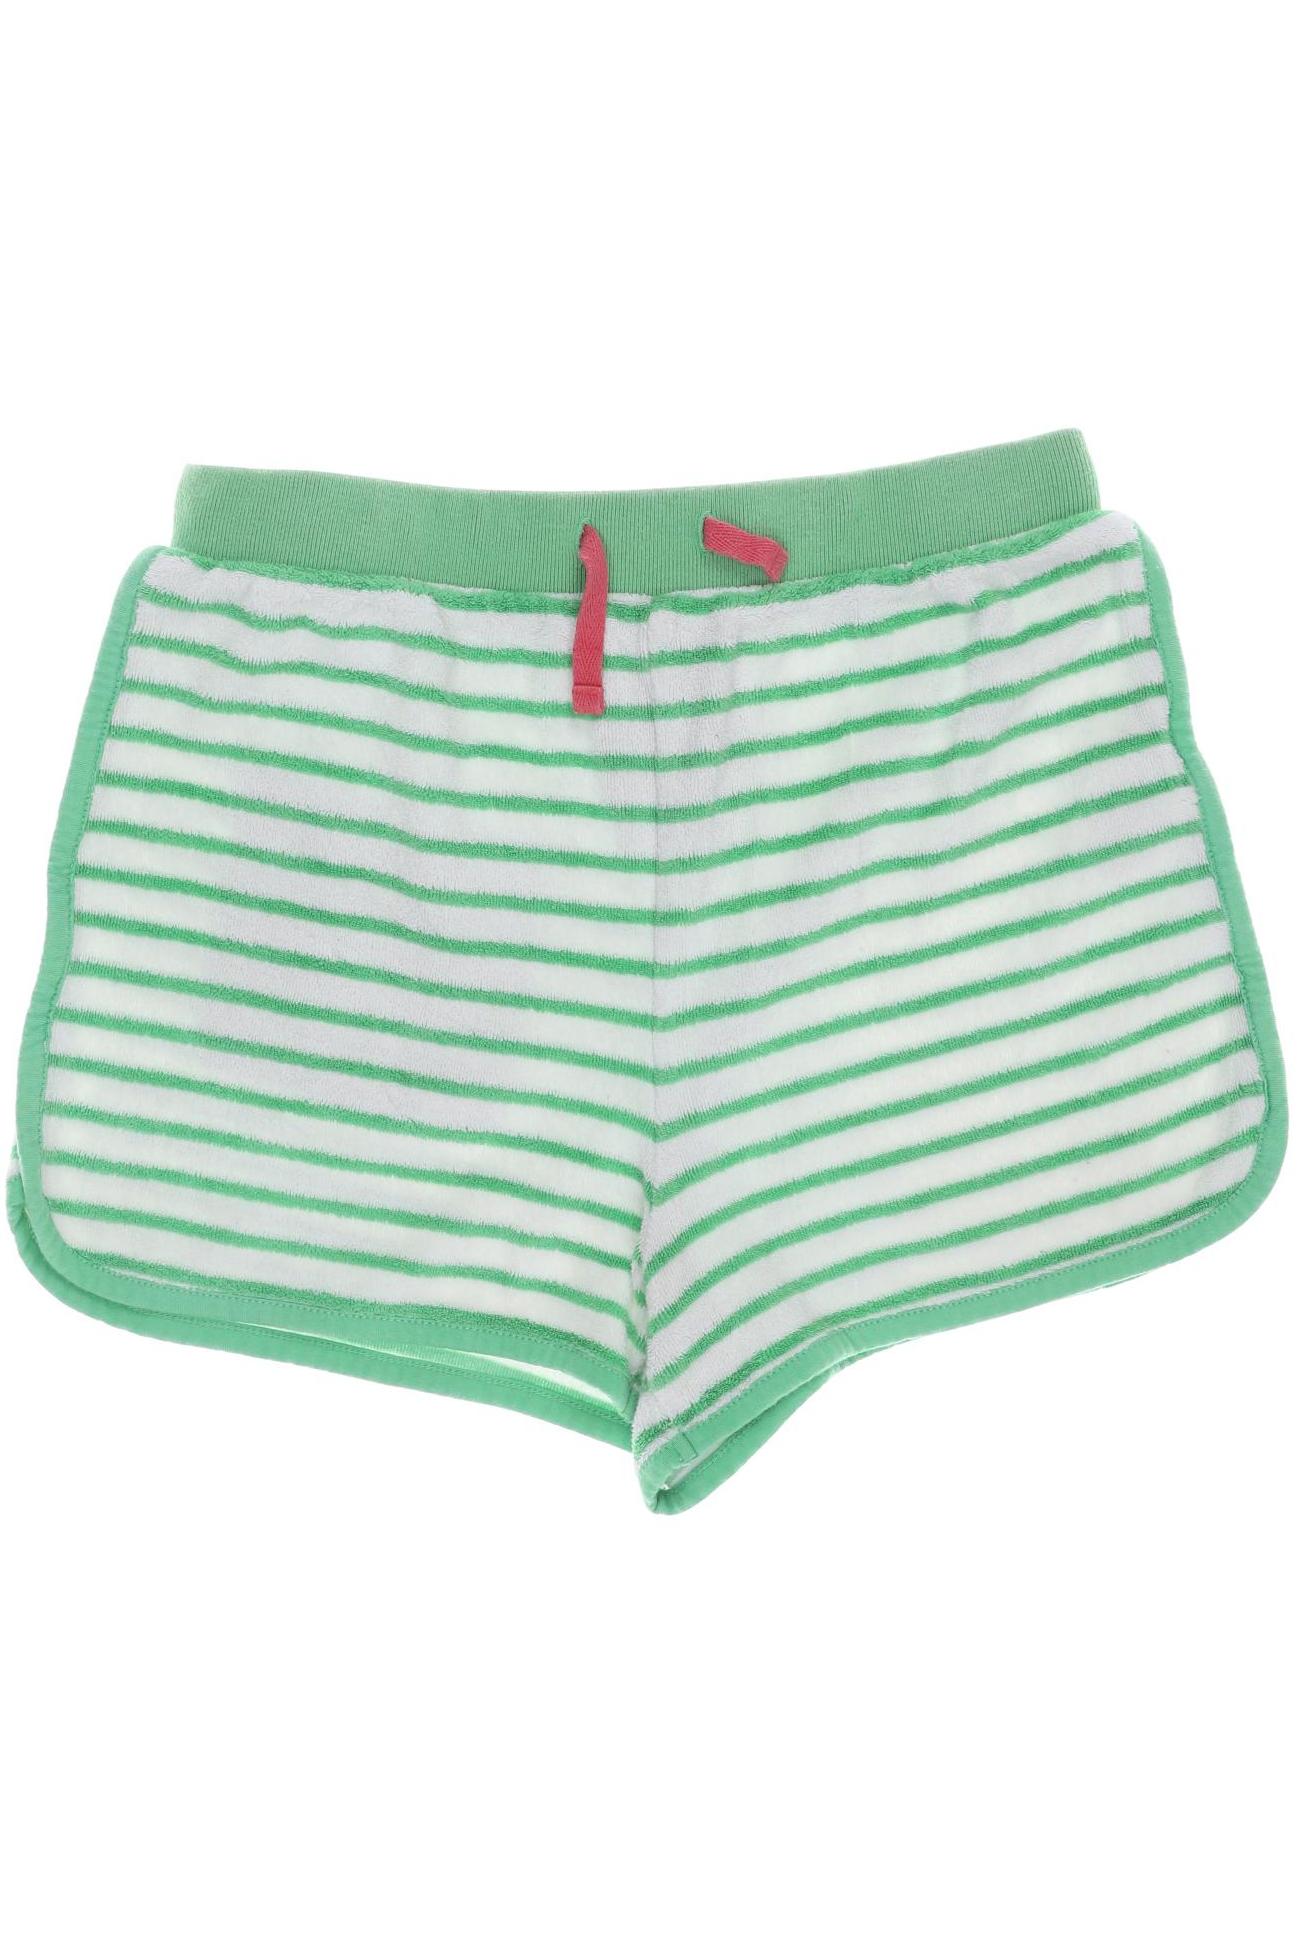 Mini Boden Damen Shorts, grün, Gr. 158 von Mini Boden